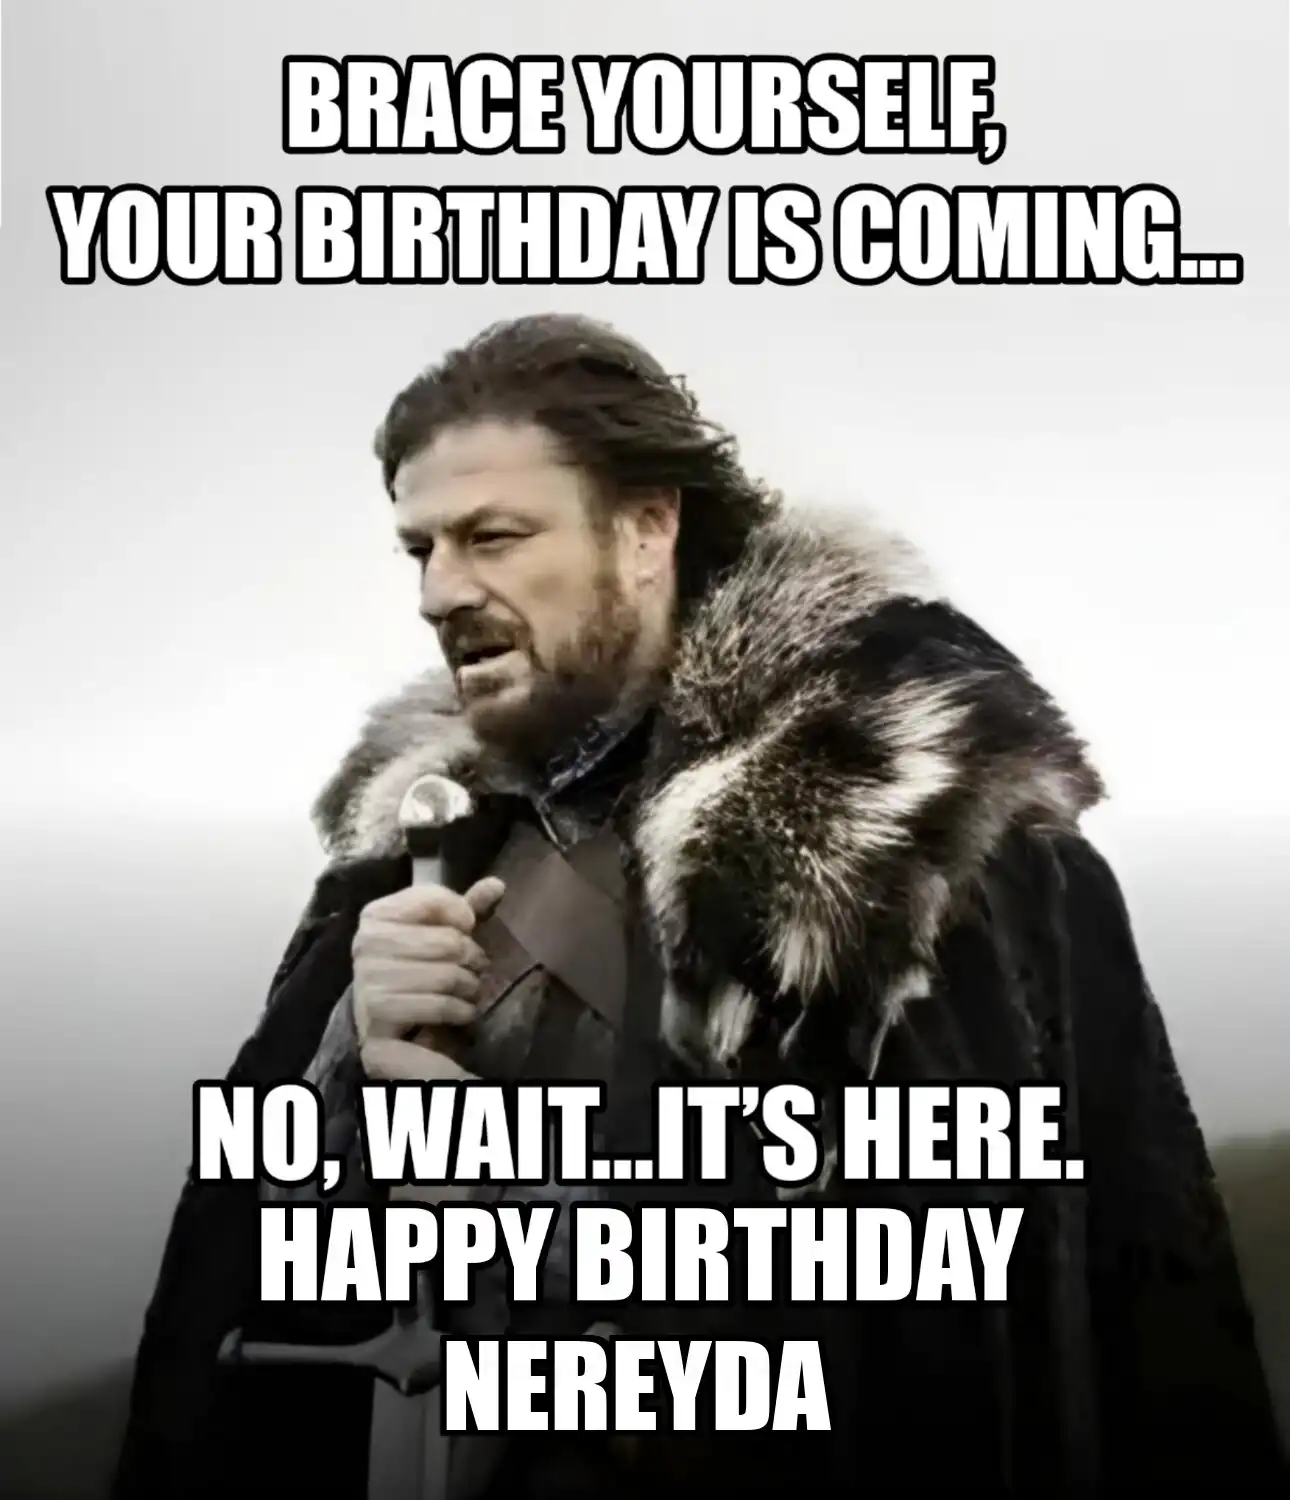 Happy Birthday Nereyda Brace Yourself Your Birthday Is Coming Meme